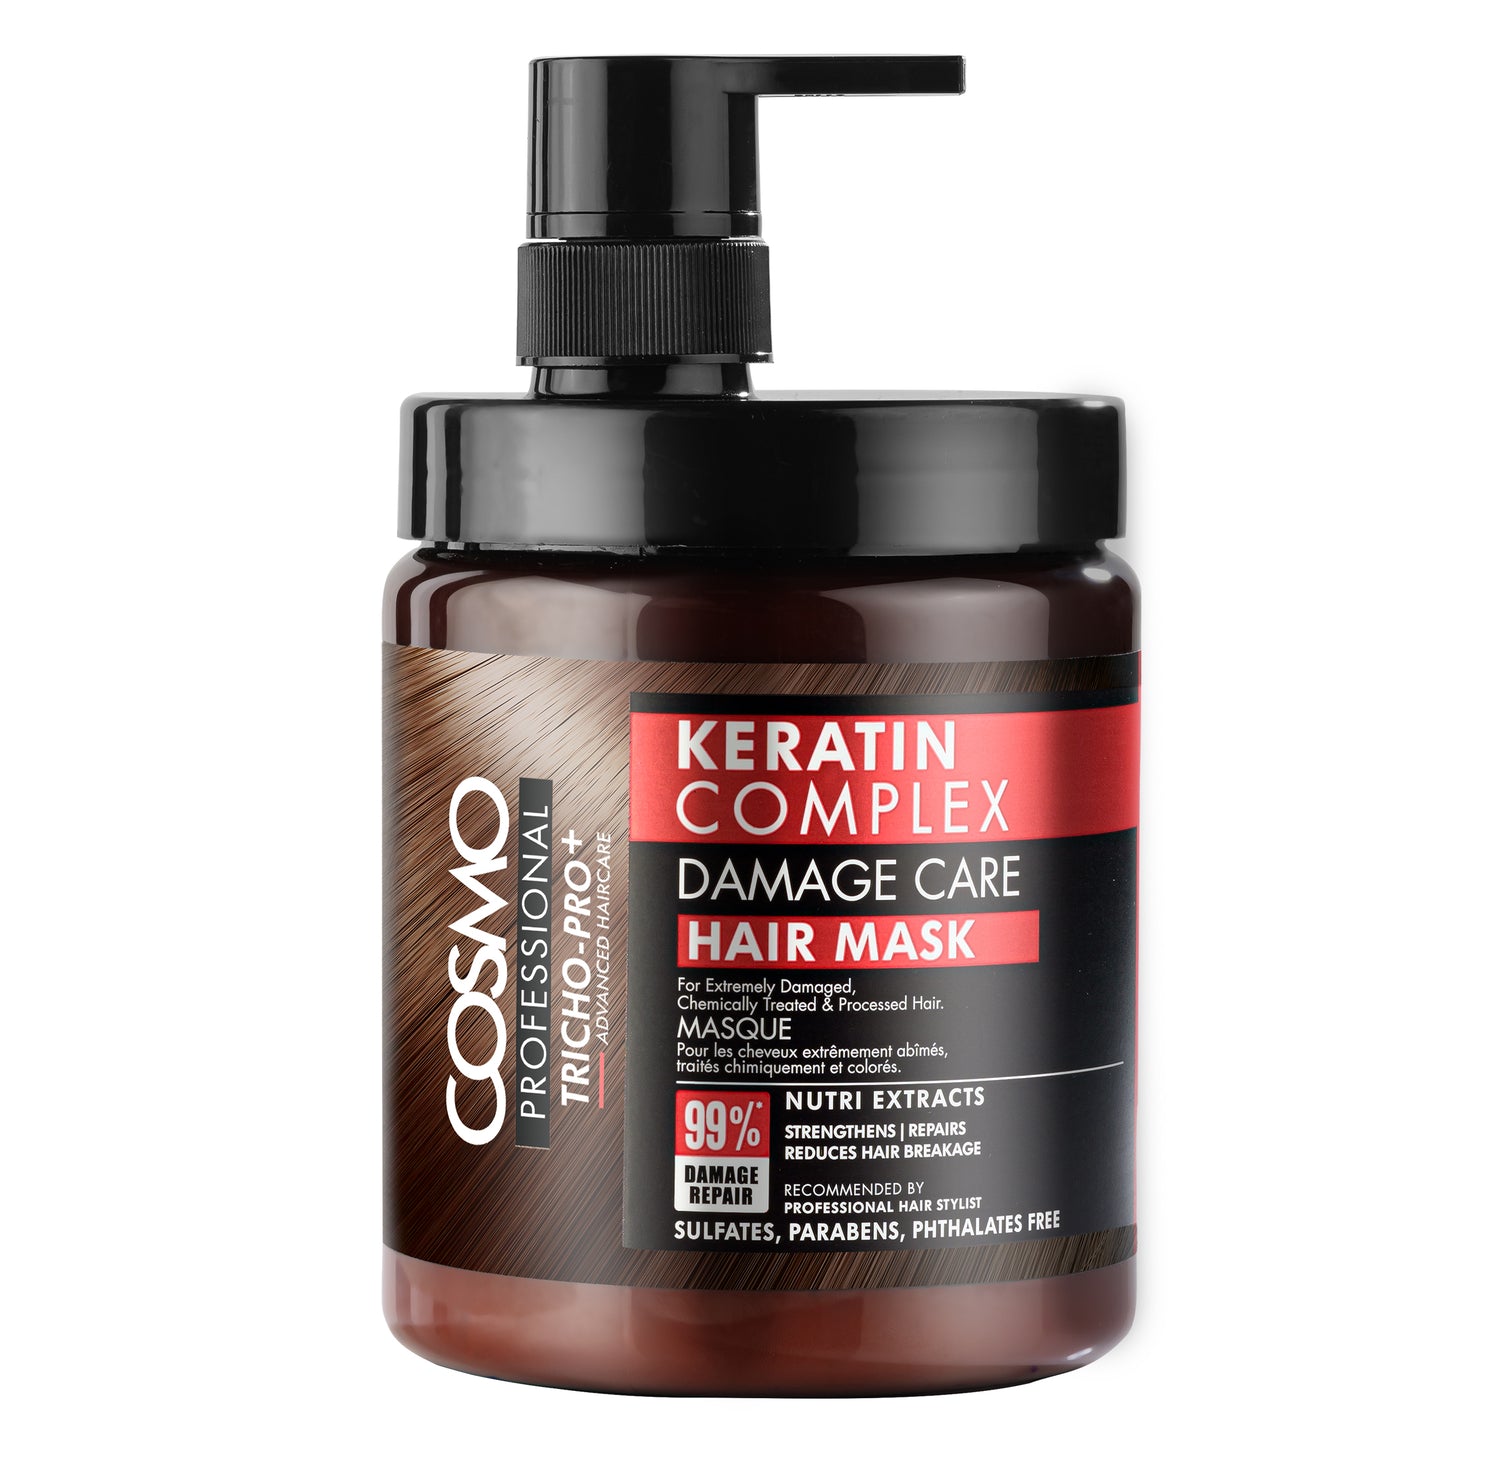 KERATIN COMPLEX - DAMAGE CARE HAIR MASK